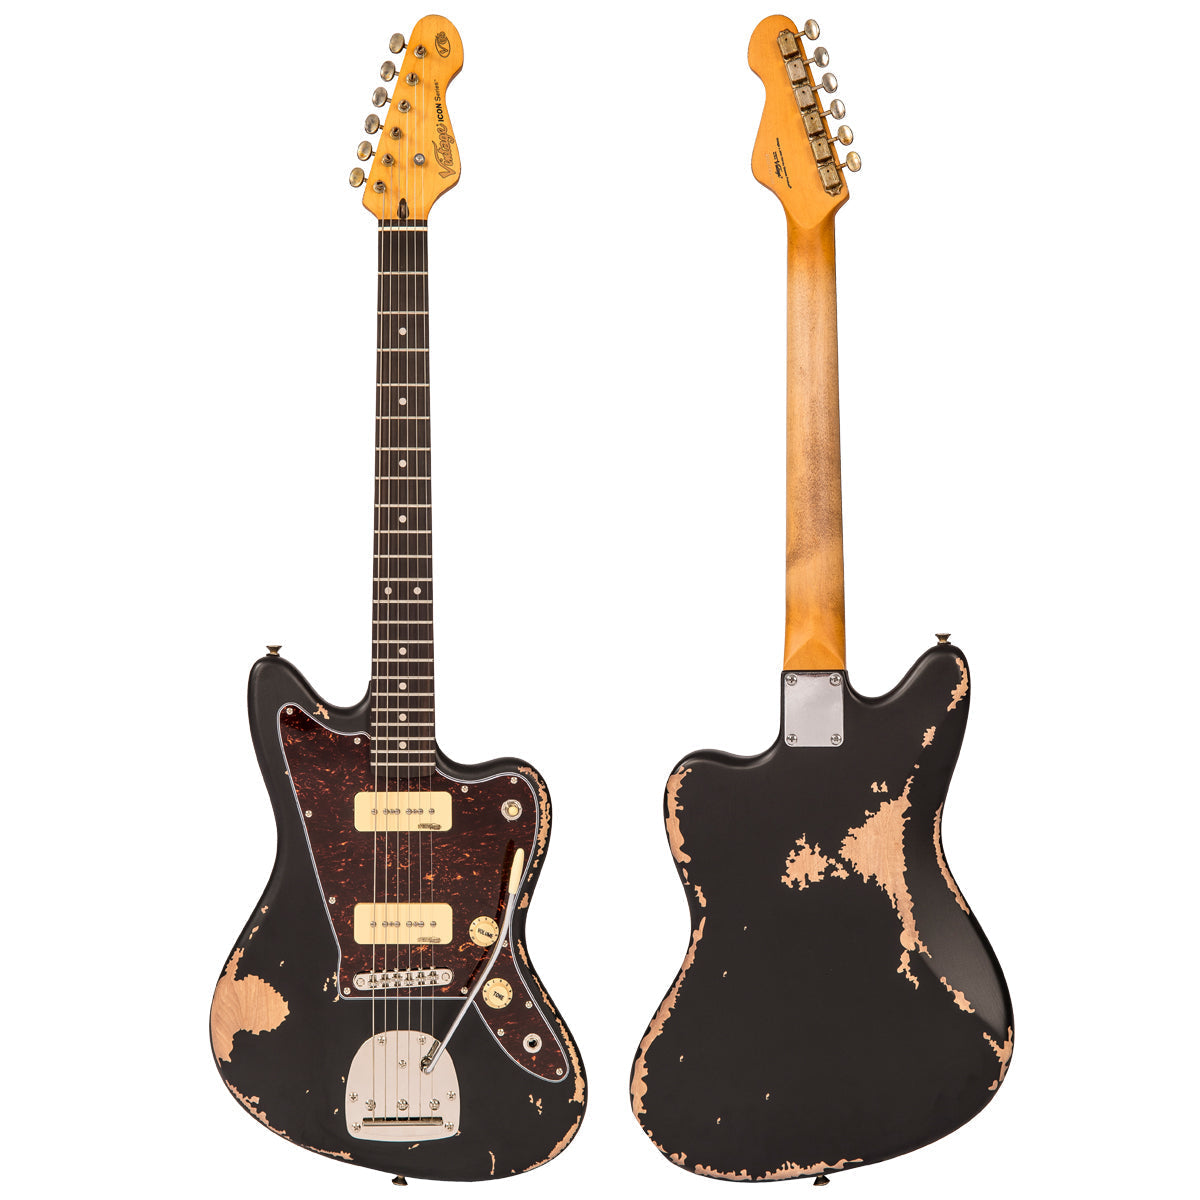 Vintage V65 ICON Vibrato Electric Guitar ~ Distressed Black, Electric Guitar for sale at Richards Guitars.